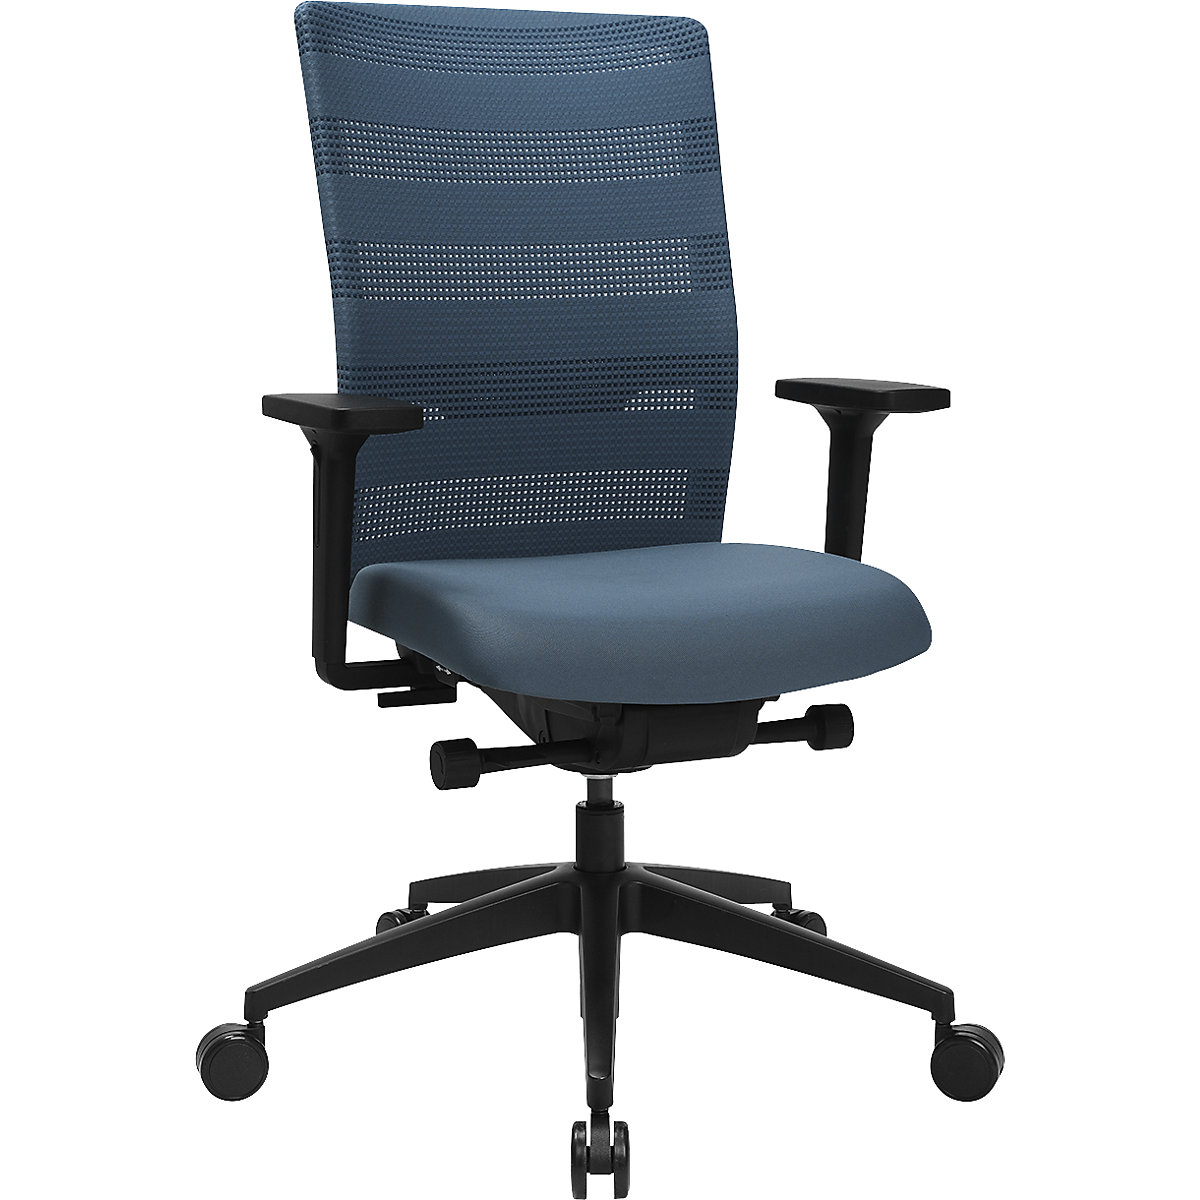 SITNESS AirWork office swivel chair – Topstar